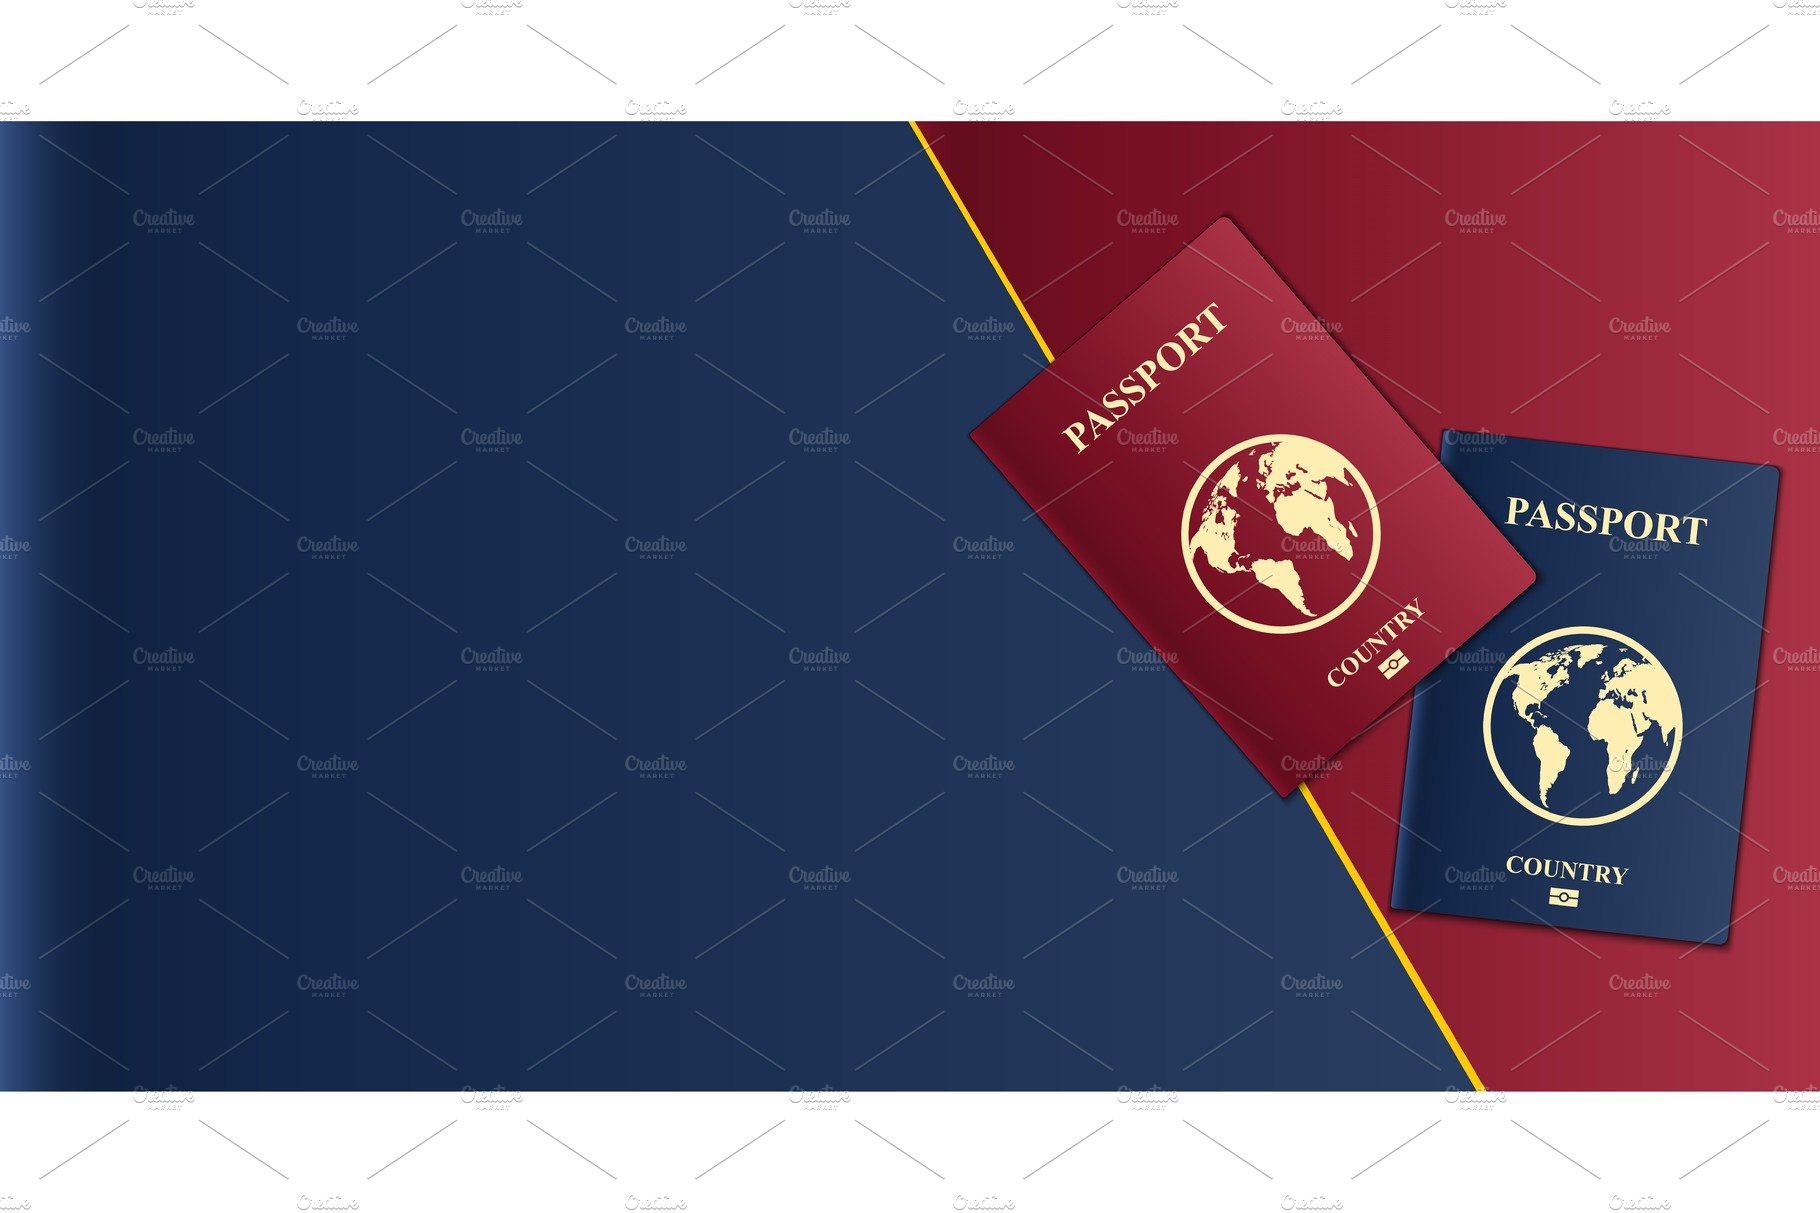 Passports, international document. cover image.